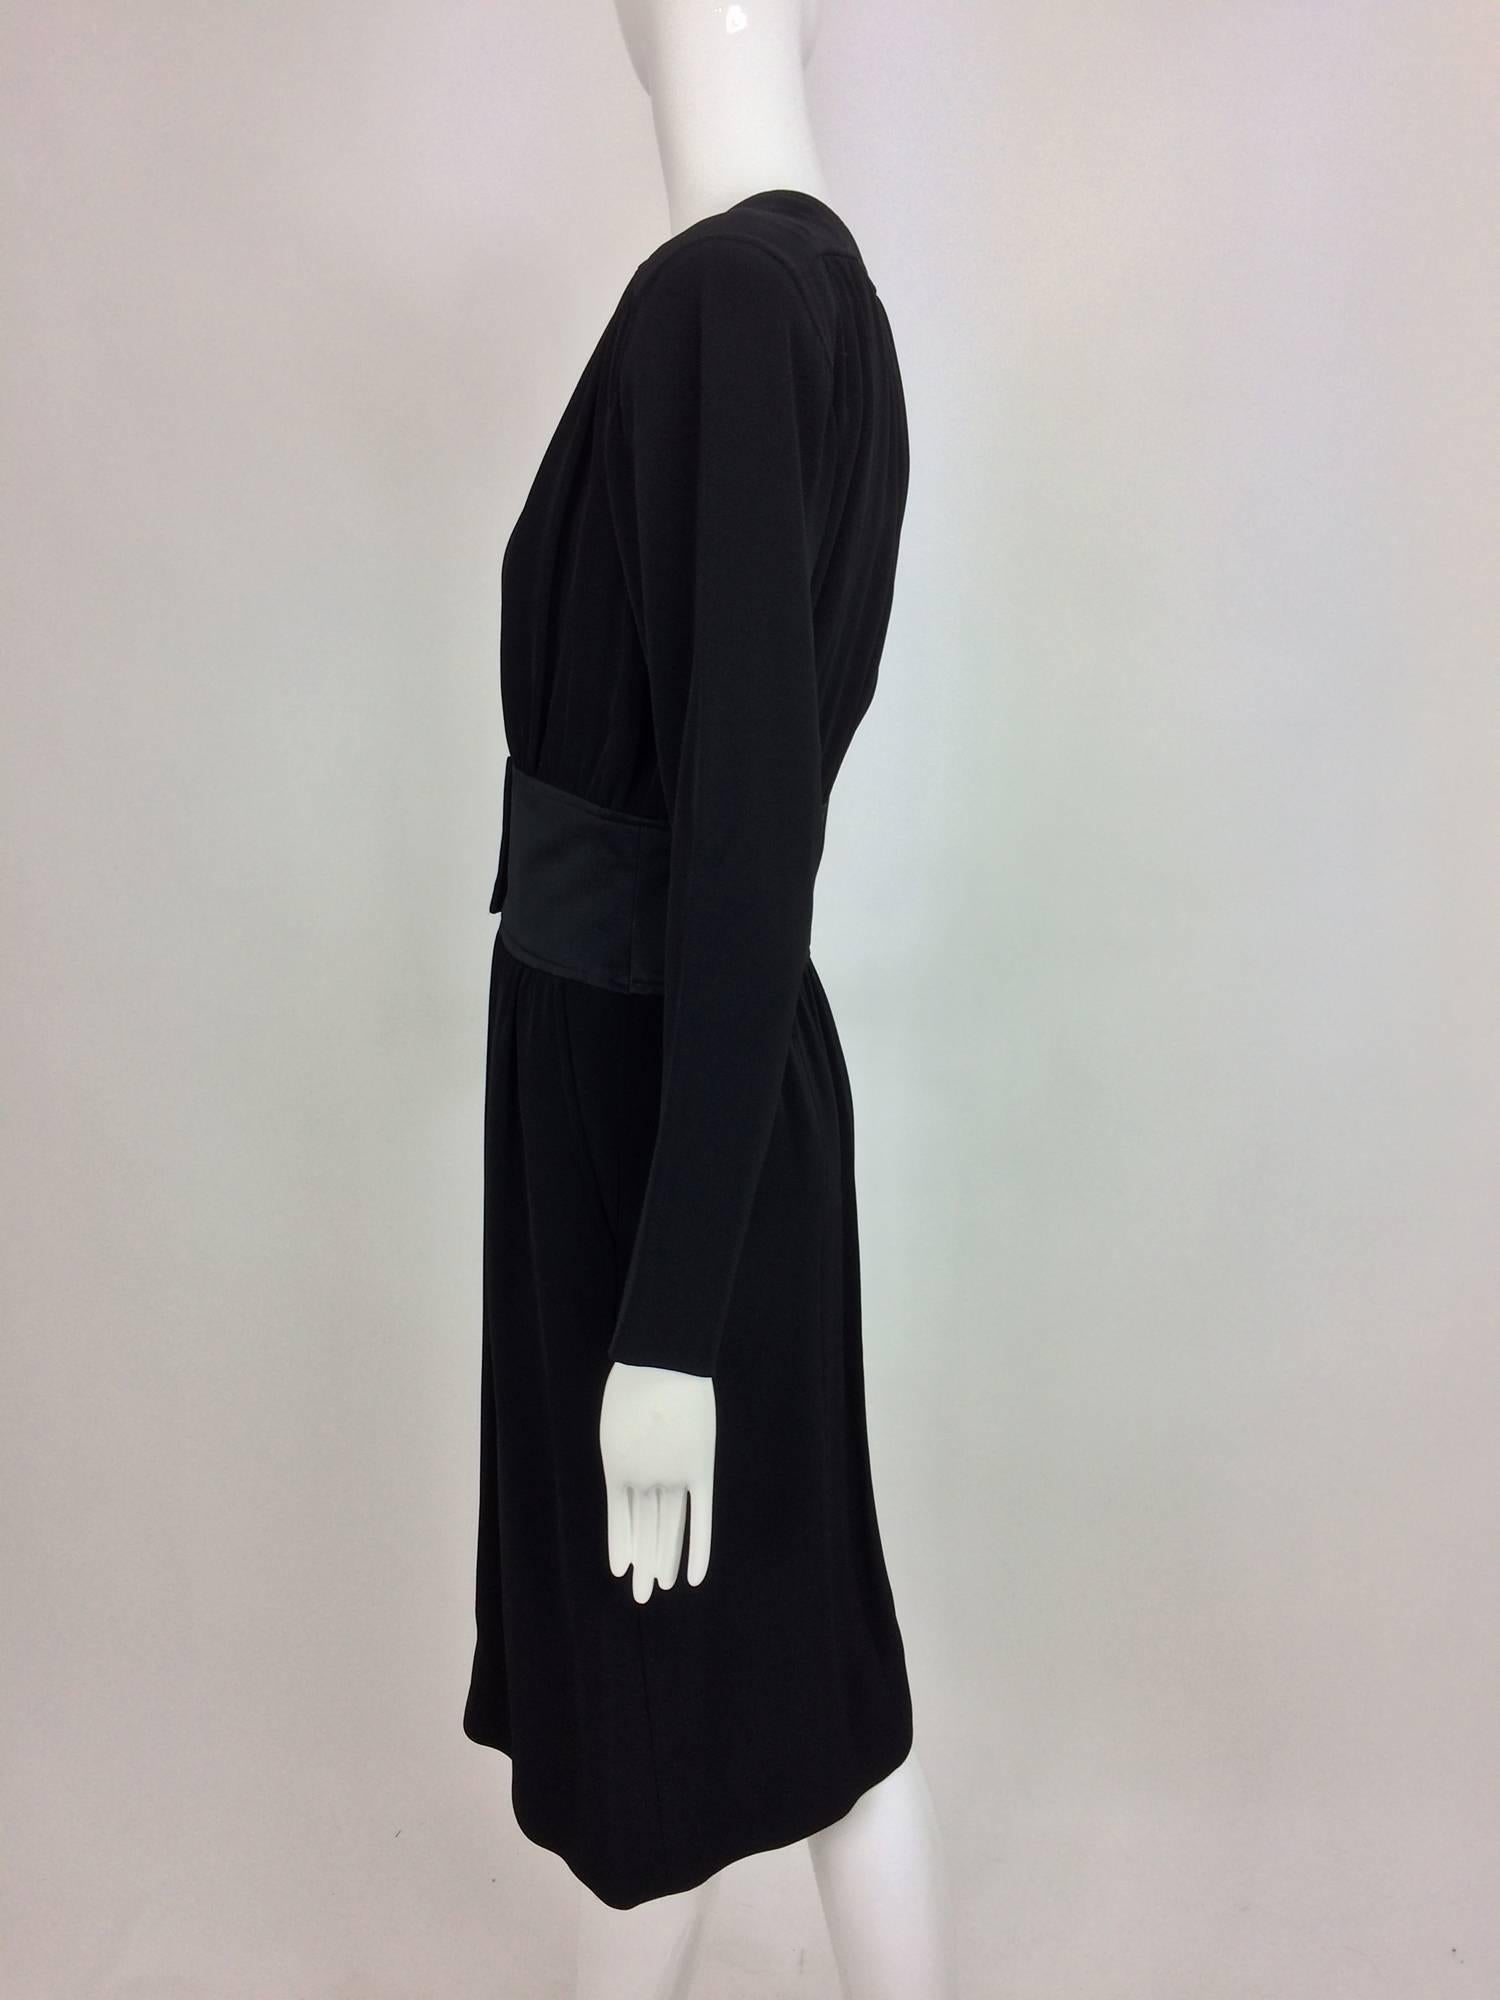 Black Vintage Yves St Laurent chic black crepe and satin cocktail dress 1990s unworn